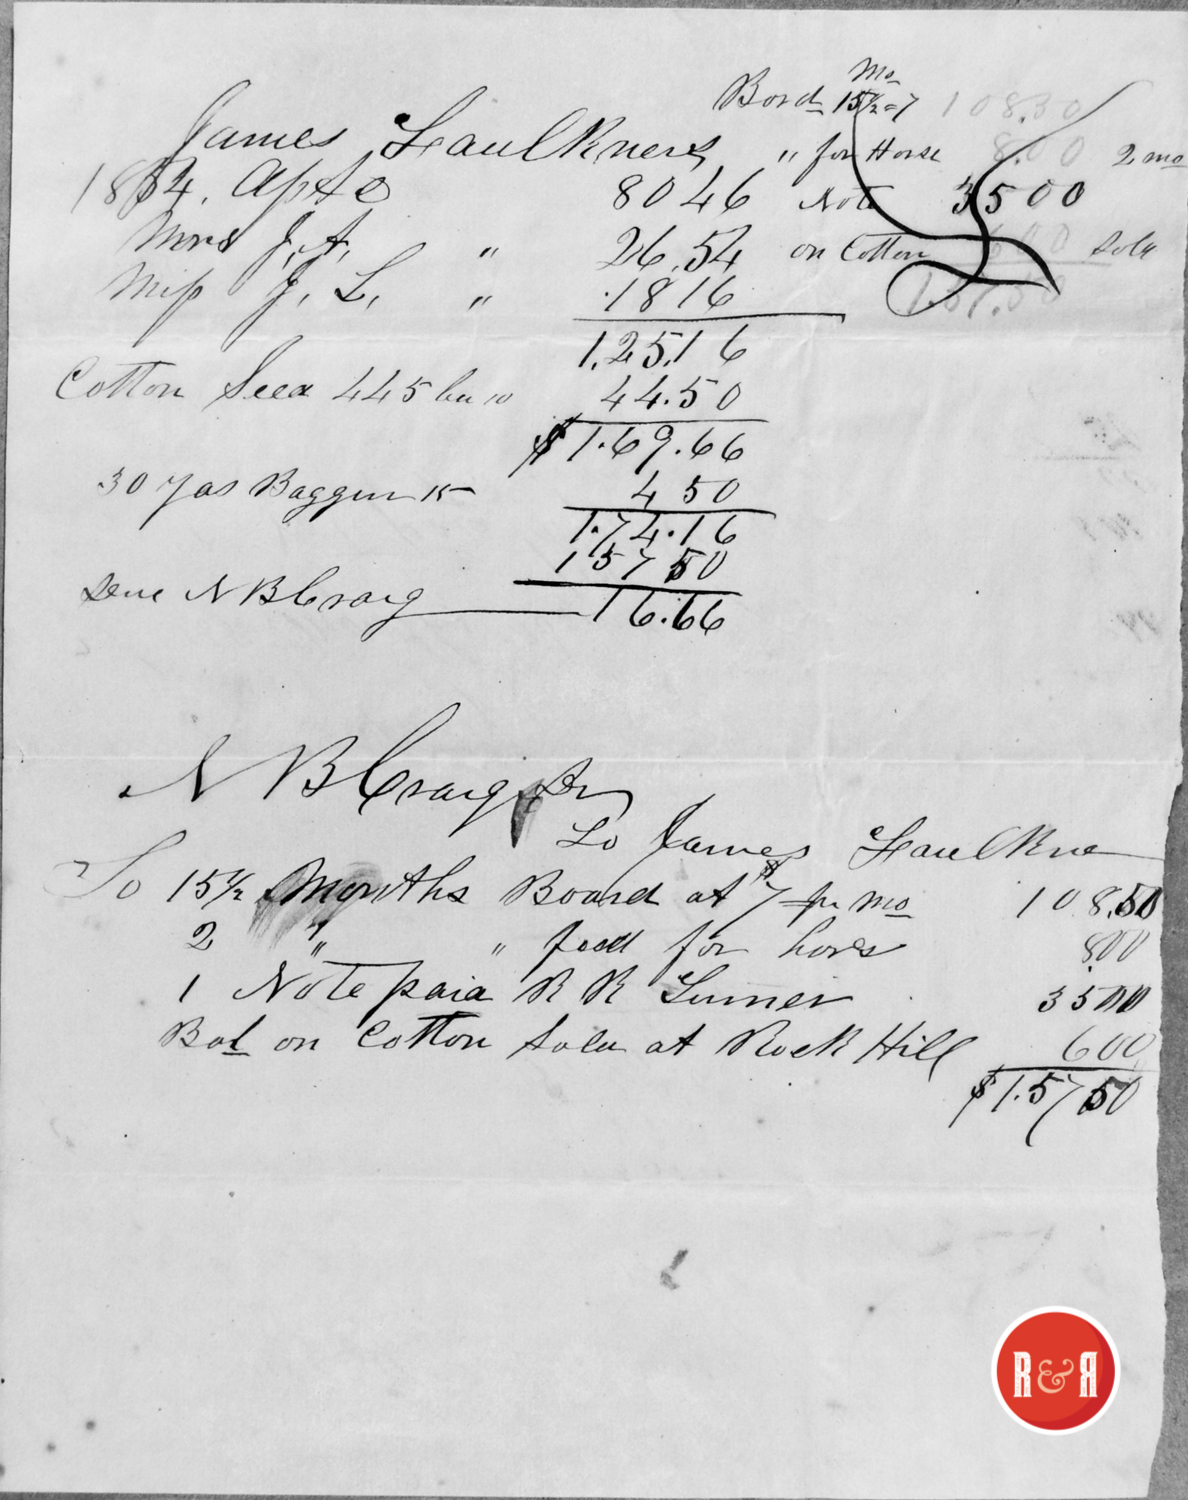 N.B. CRAIG SHIPS COTTON TO ROCK HILL, S.C. - 1854